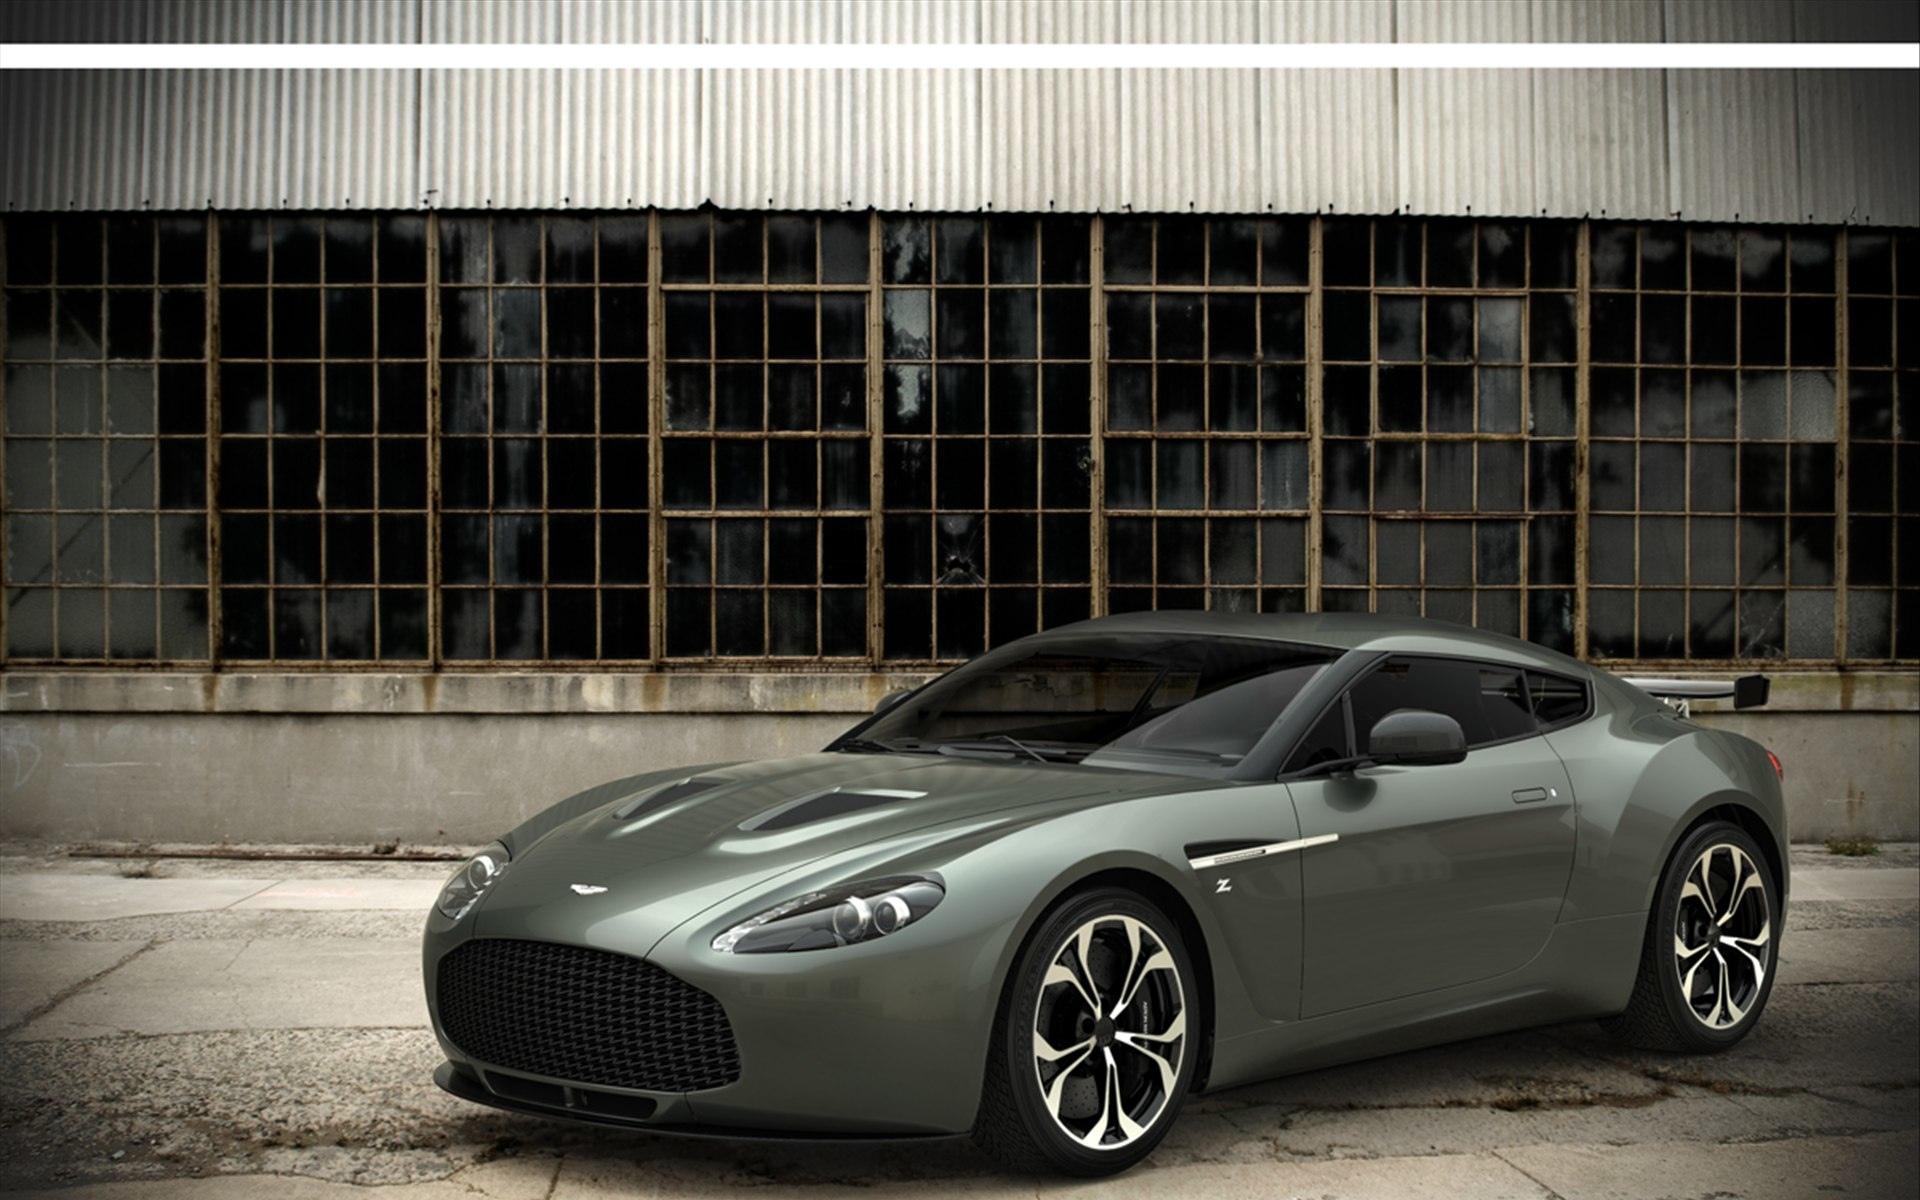 Aston Martin V12 Zagato at 1024 x 1024 iPad size wallpapers HD quality